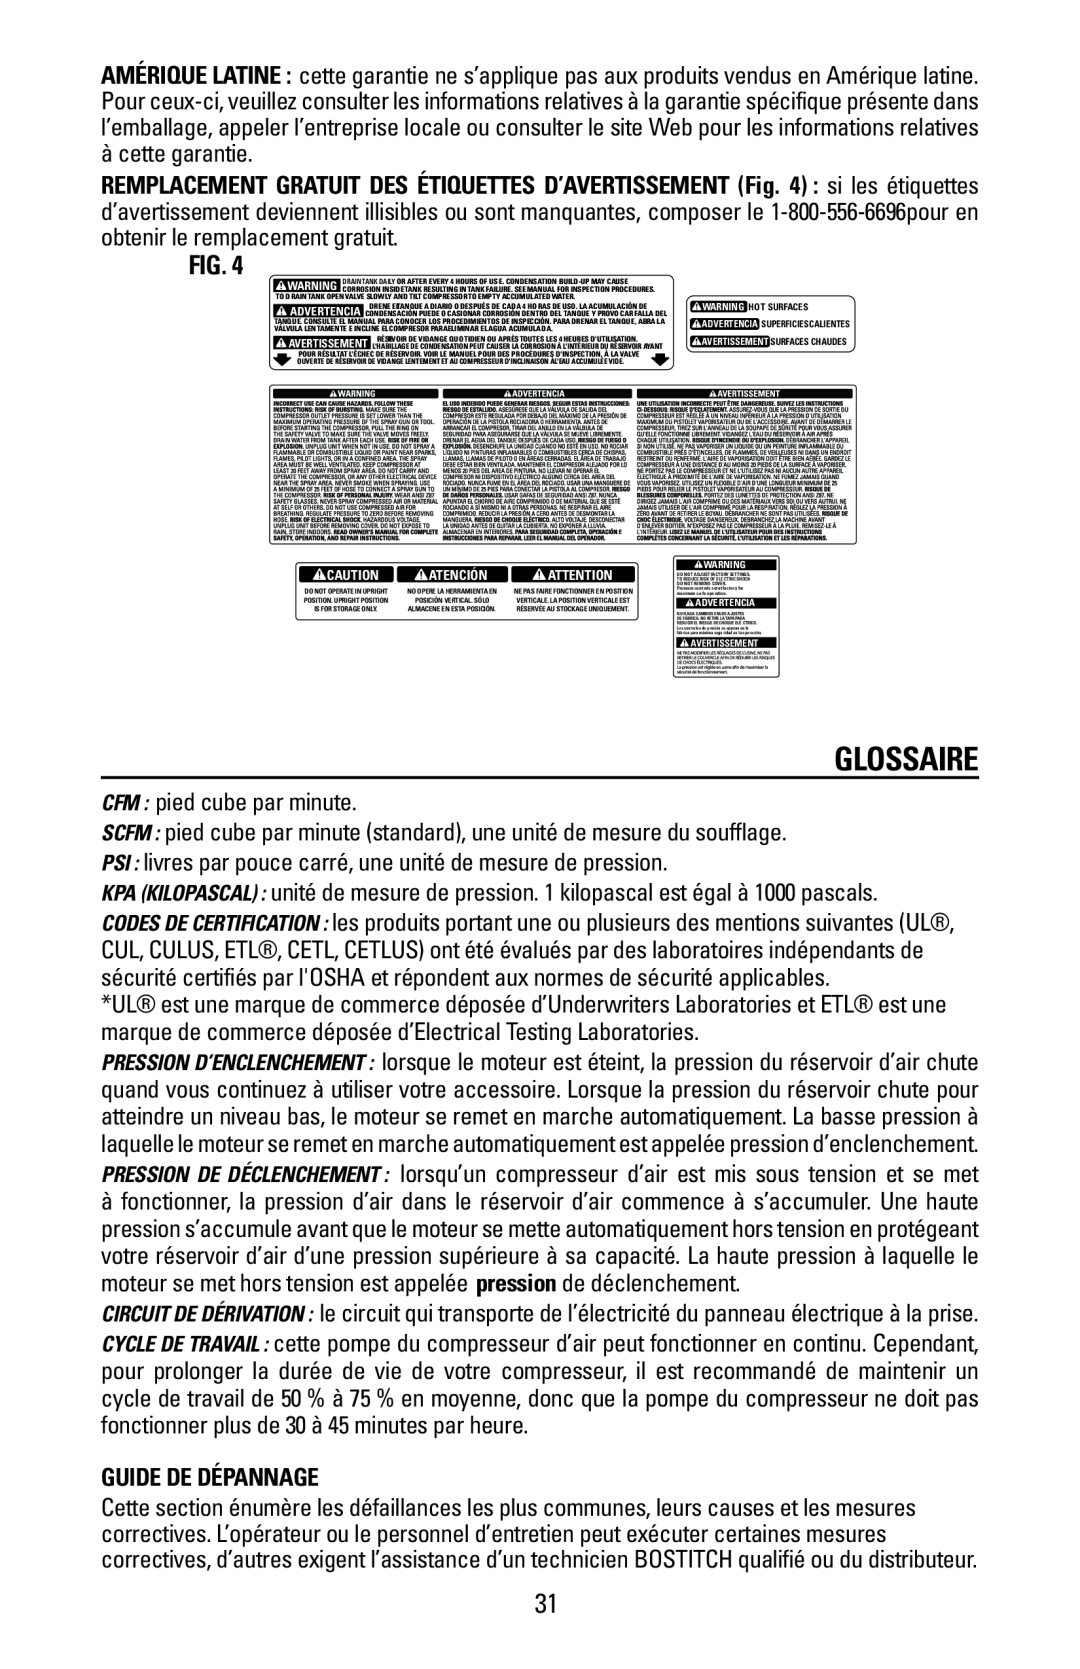 Bostitch CAP1645-OF owner manual Glossaire, Fig, Guide De Dépannage 